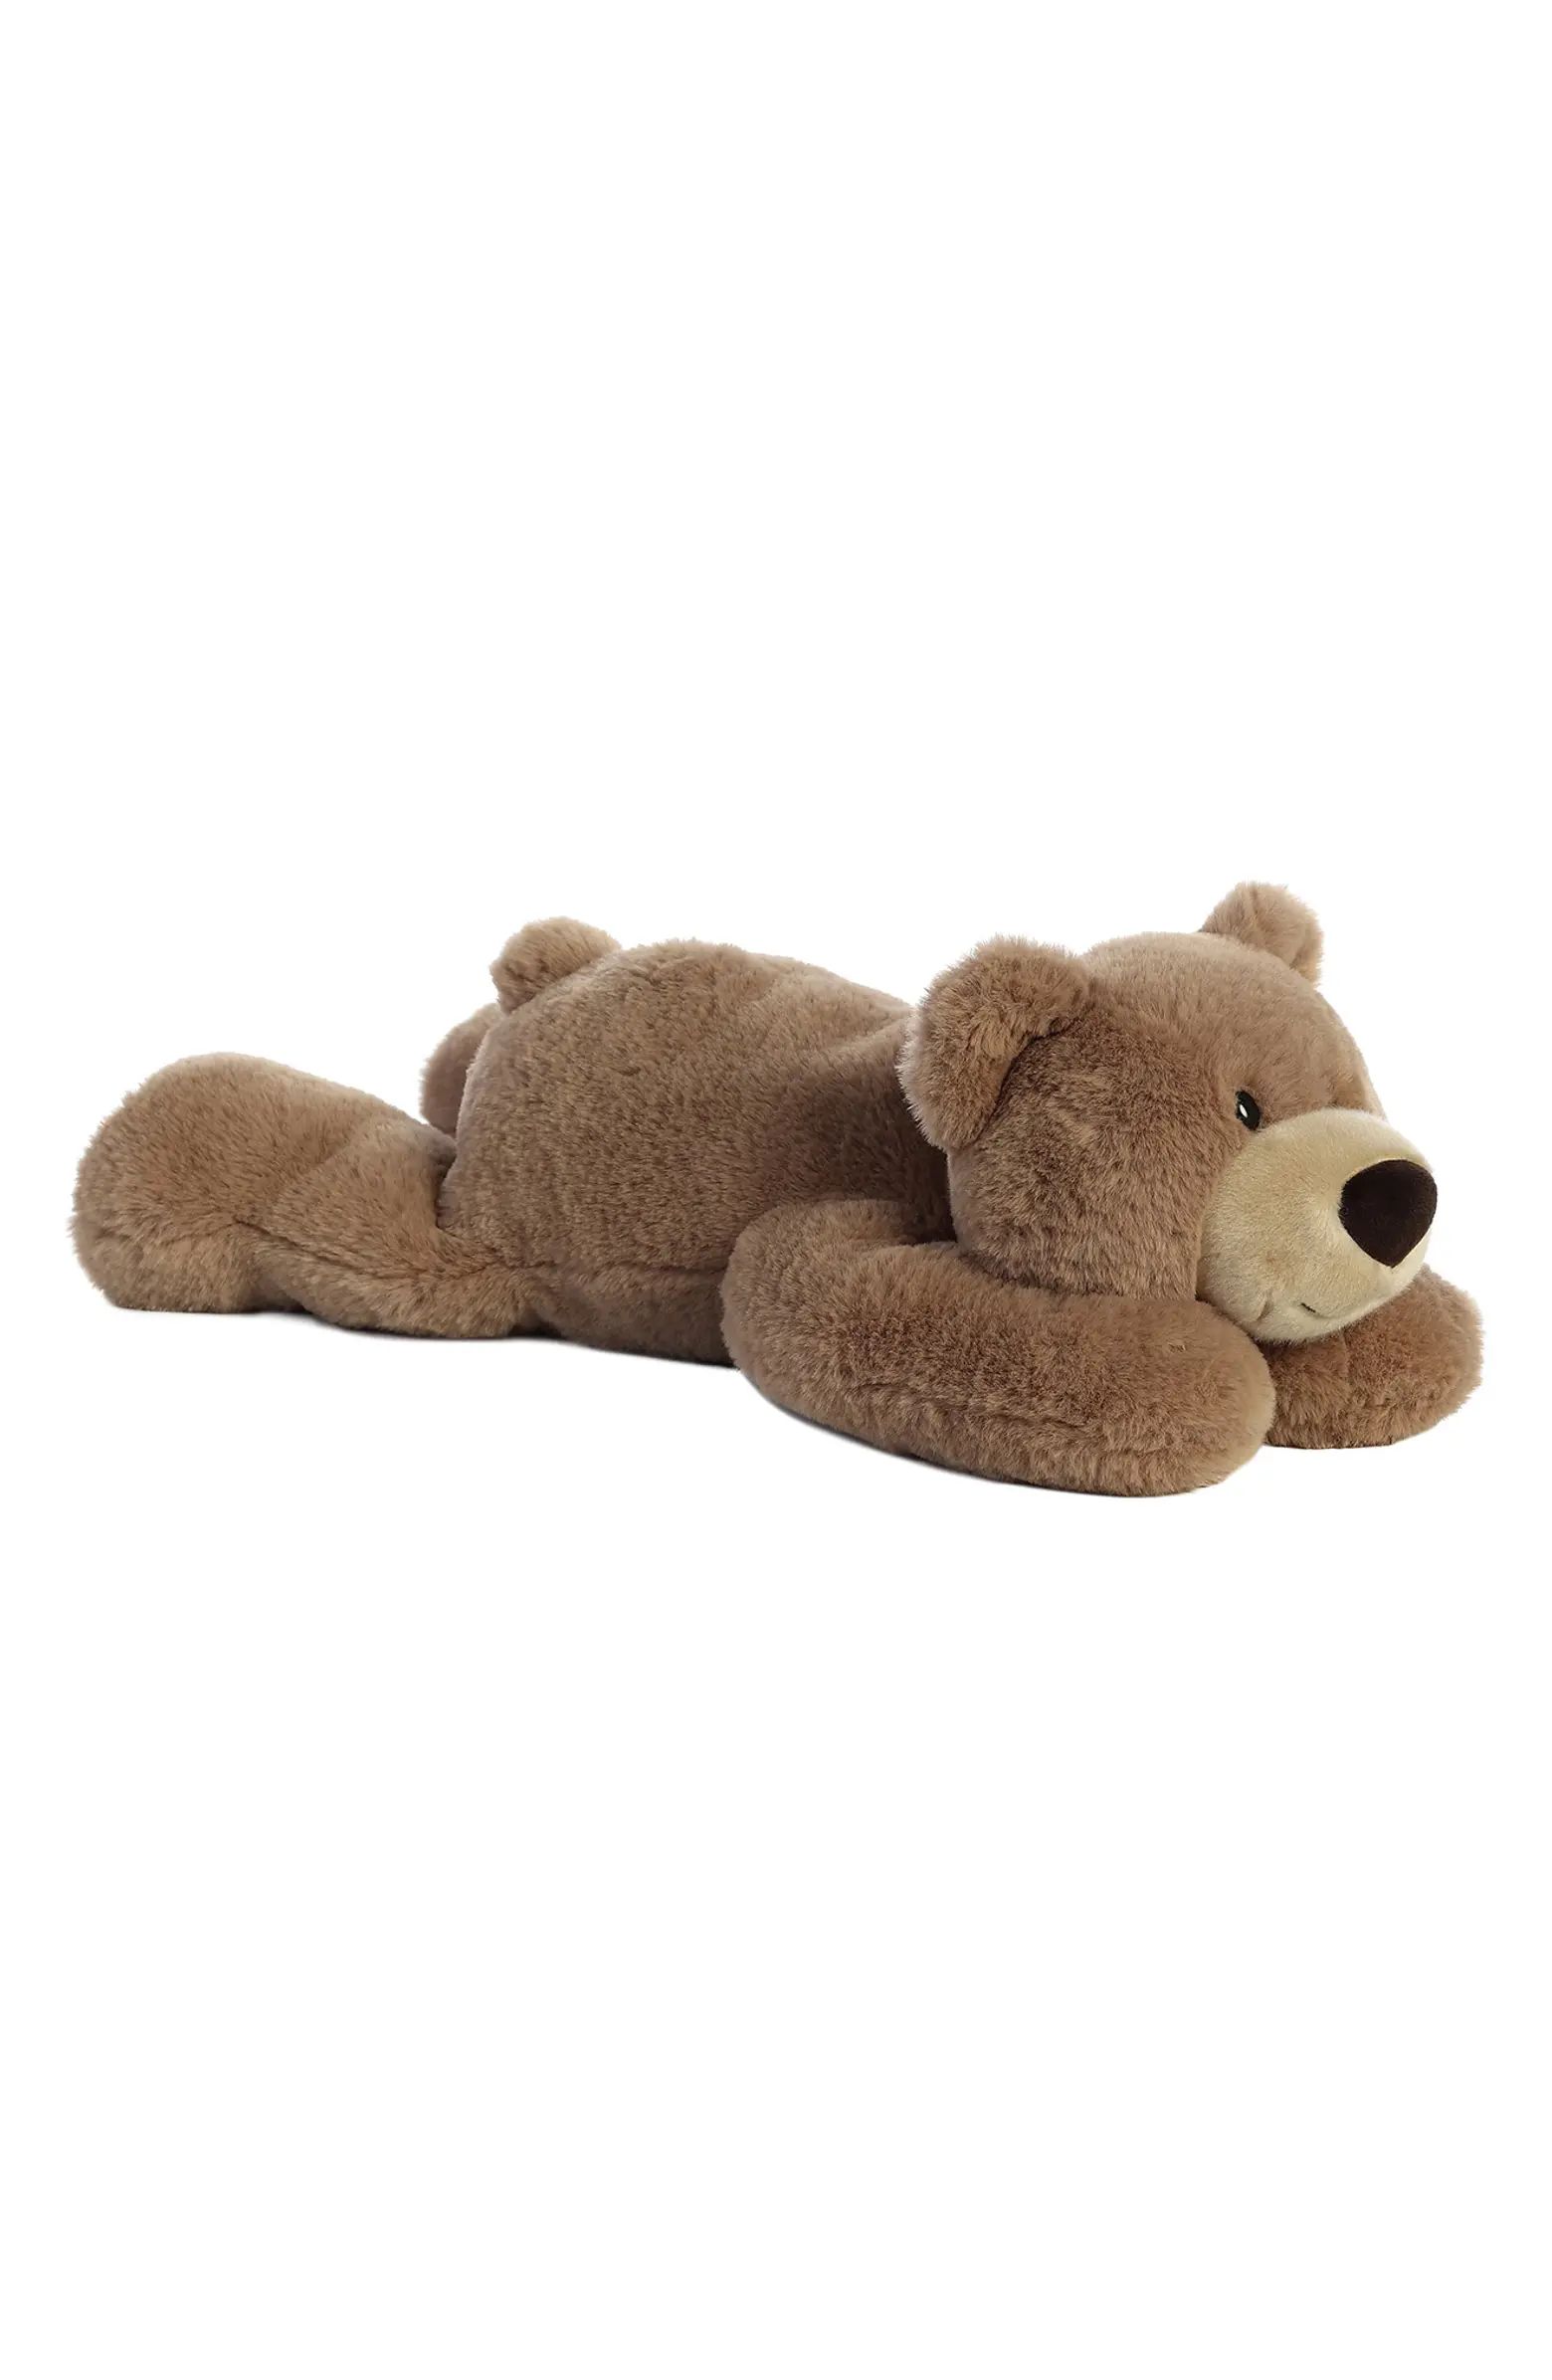 Hugga Wugga Bear Stuffed Animal | Nordstrom Rack